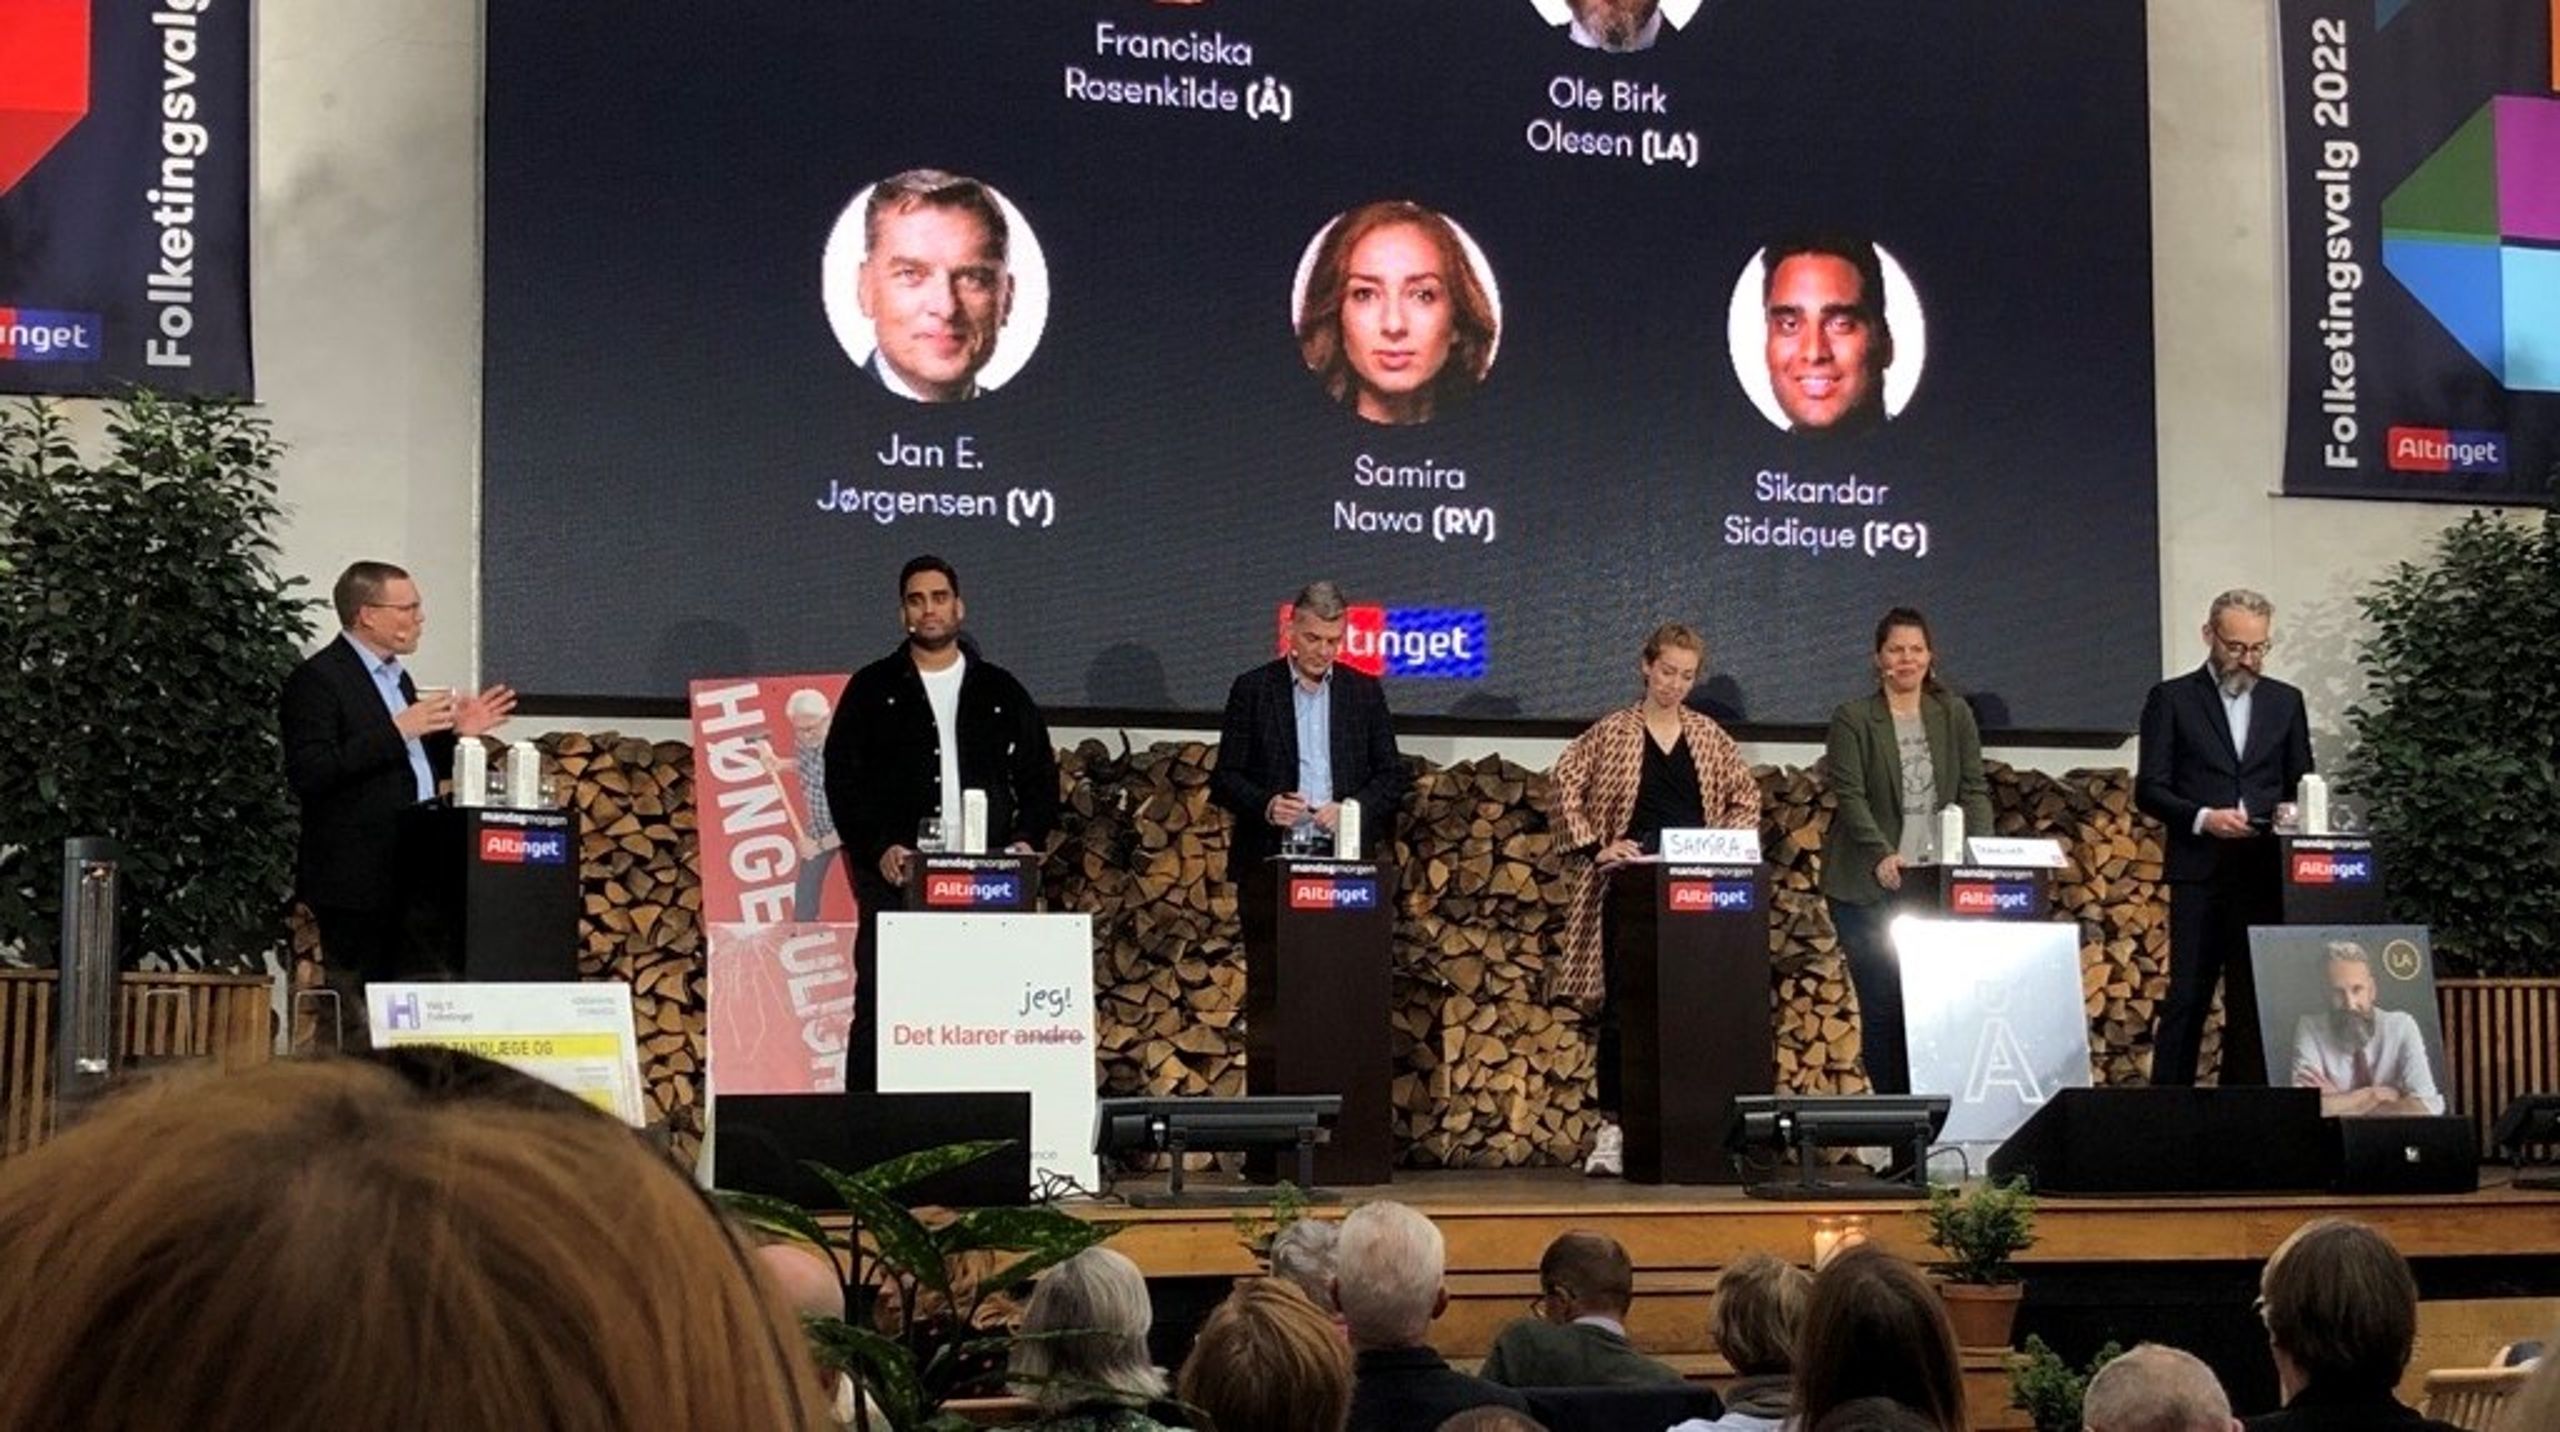 Der var høj latter, da Altinget bød op til den sidste debat inden valget med&nbsp;Samira
Nawa (B), Franciska Rosenkilde (Å), Jan E. Jørgensen (V), Sikandar Siddique (Q)
og Ole Birk Olesen (I).